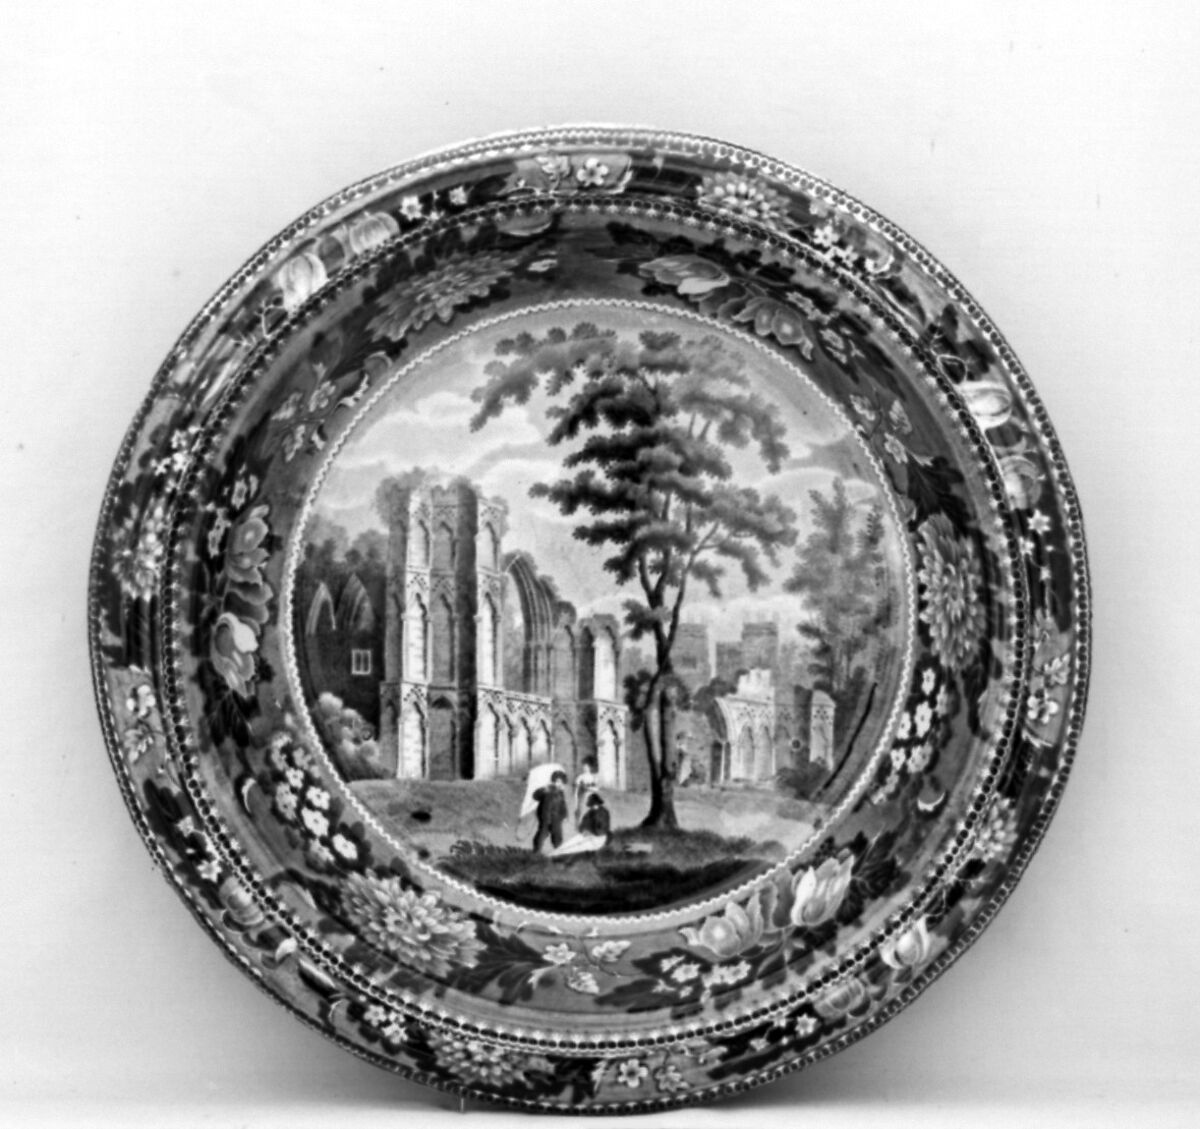 Basin, William Adams (British, Greenfield, Staffordshire 1798–1865), Pottery, British, Staffordshire 